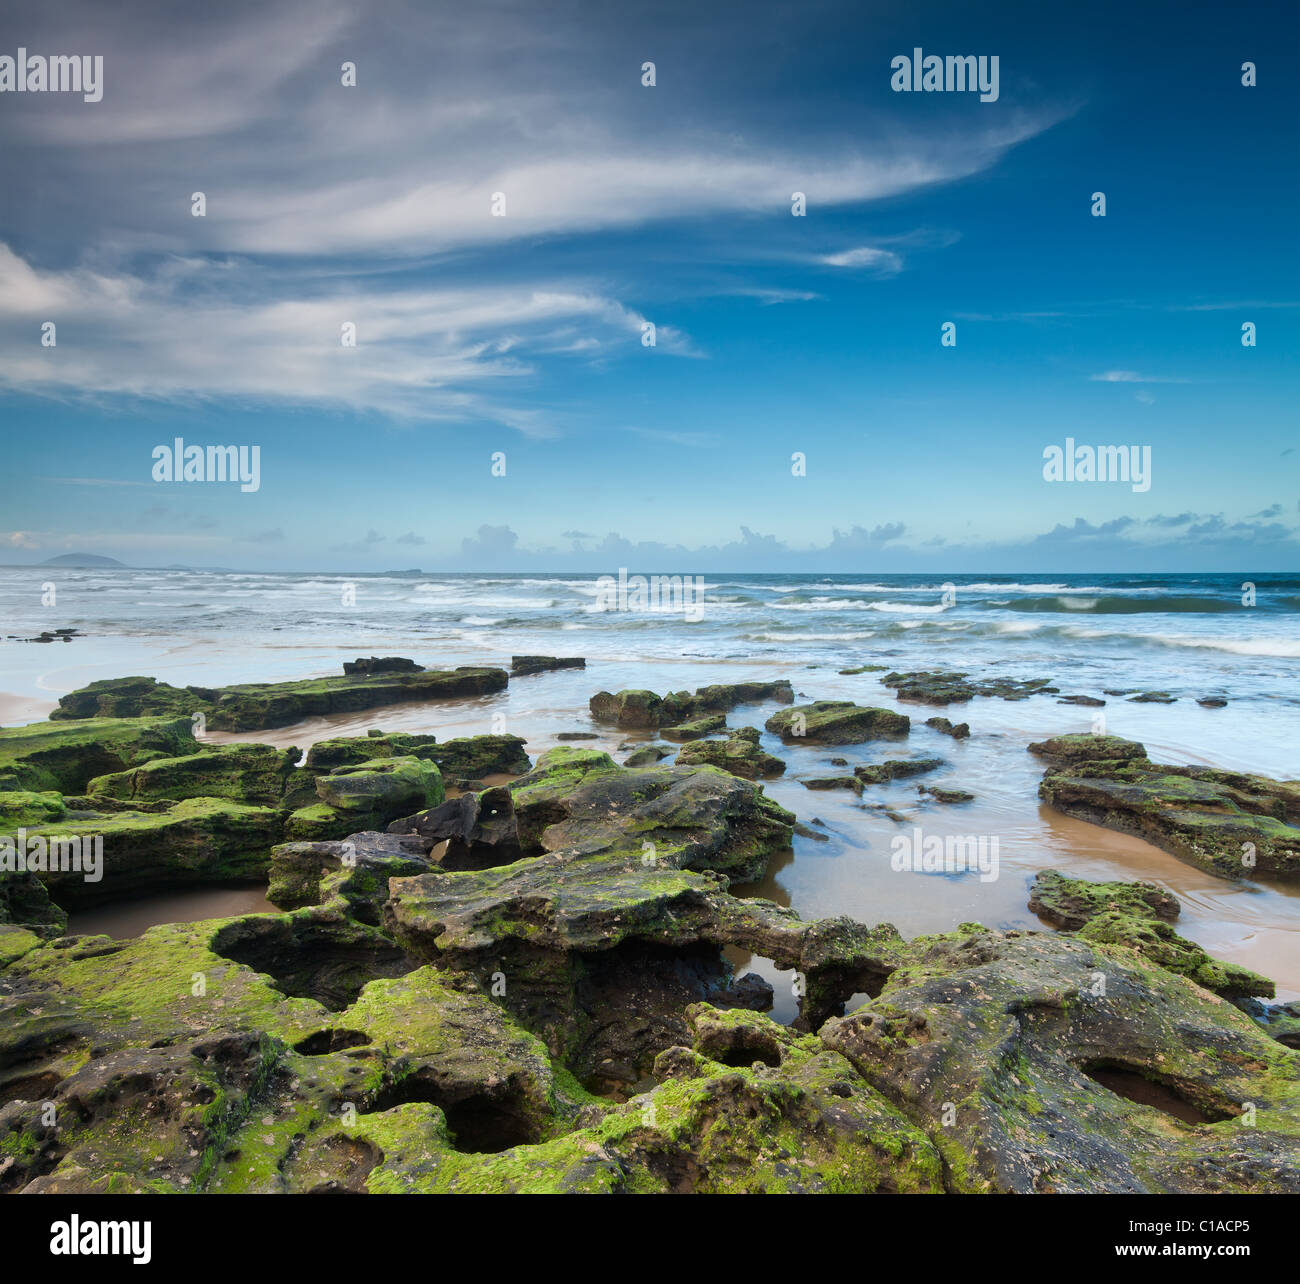 Australian beach at twilight with interesting rocks in foreground (alexandra headland,qld,australia) Stock Photo